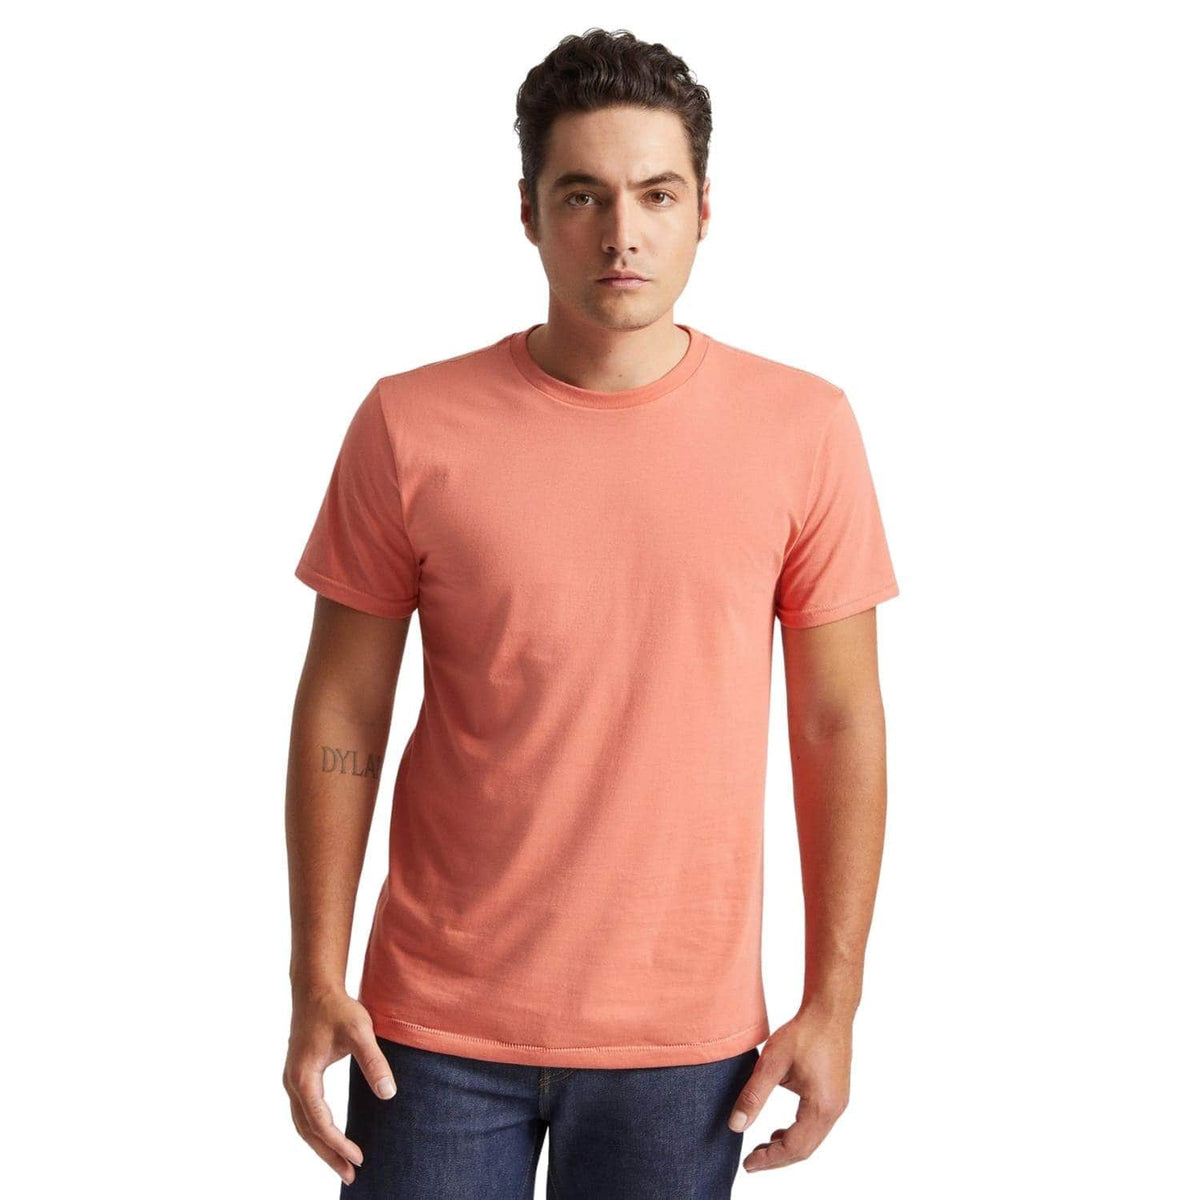 Brixton Basic Tailored T-Shirt - Apricot Jam - Mens Plain T-Shirt by Brixton